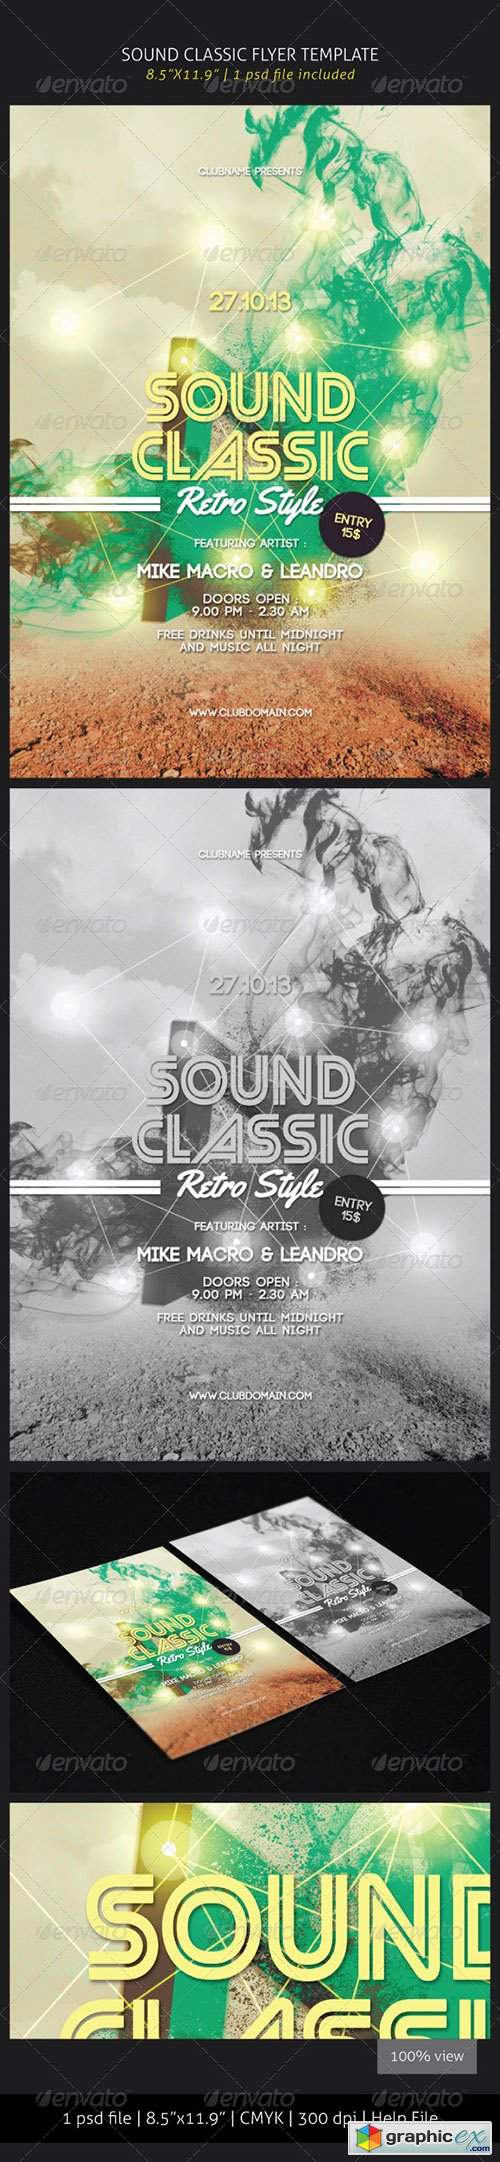 Sound Classic Flyer 5833414